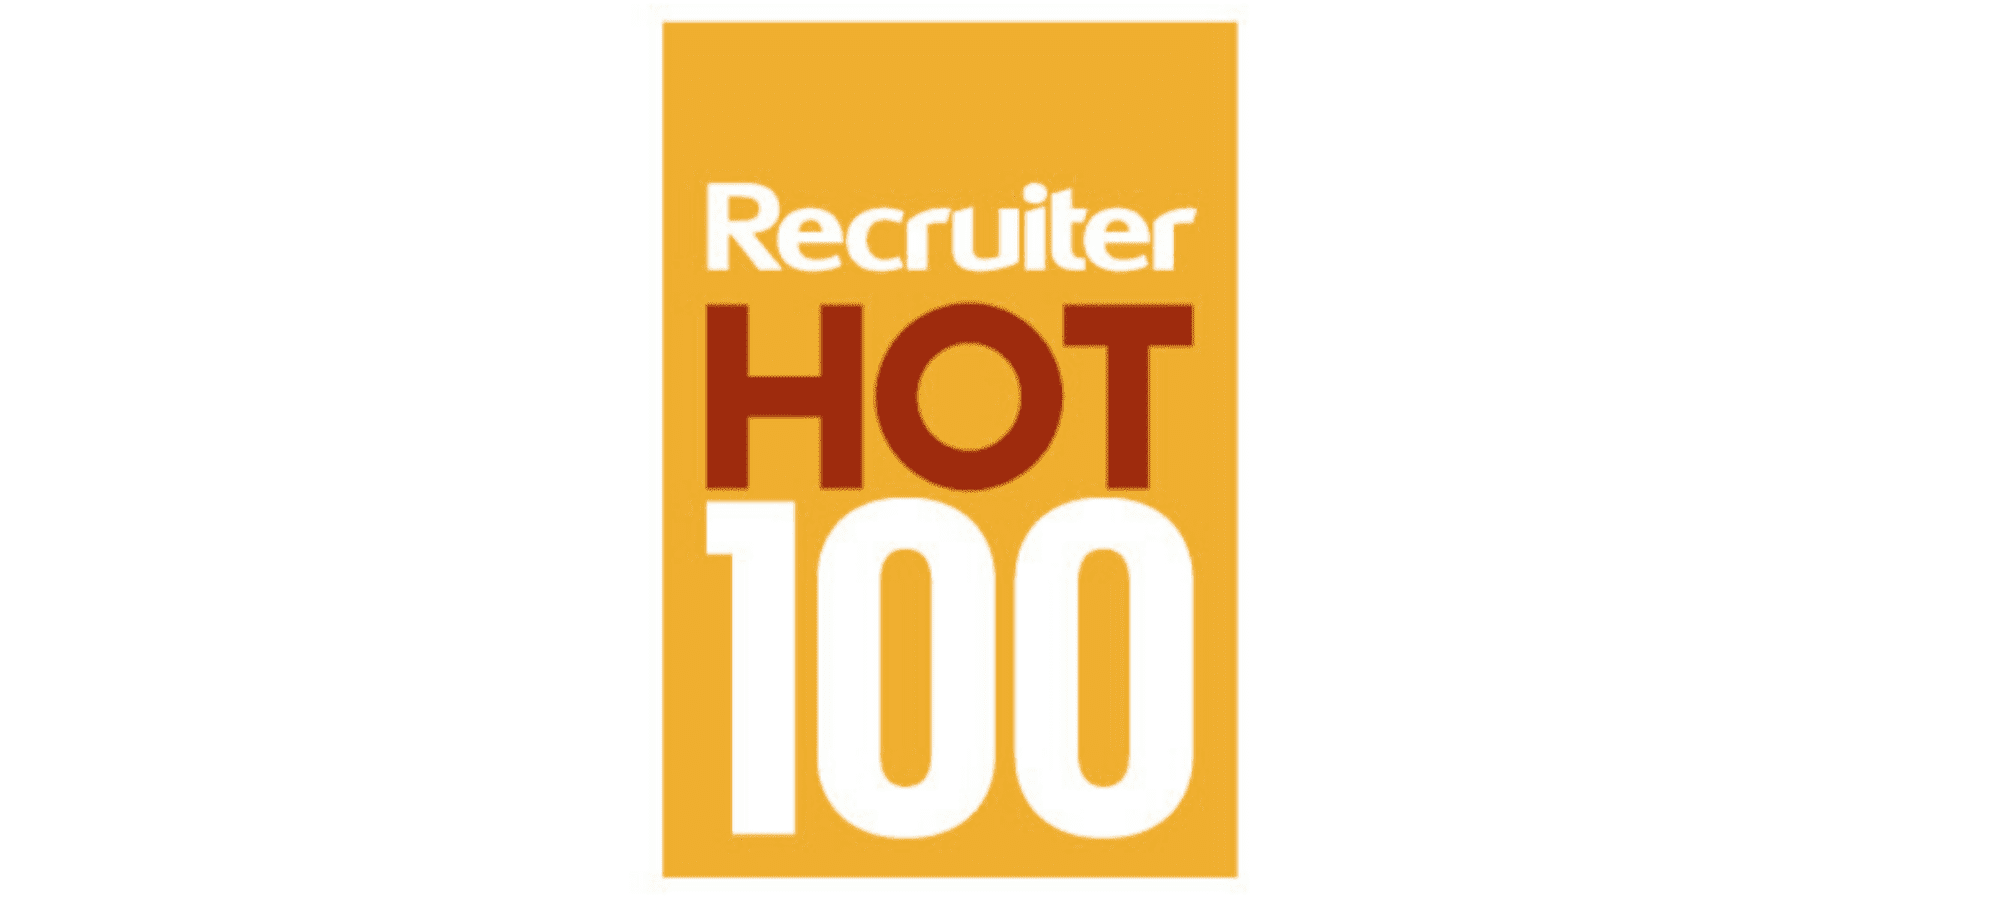 Recruiters HOT 100